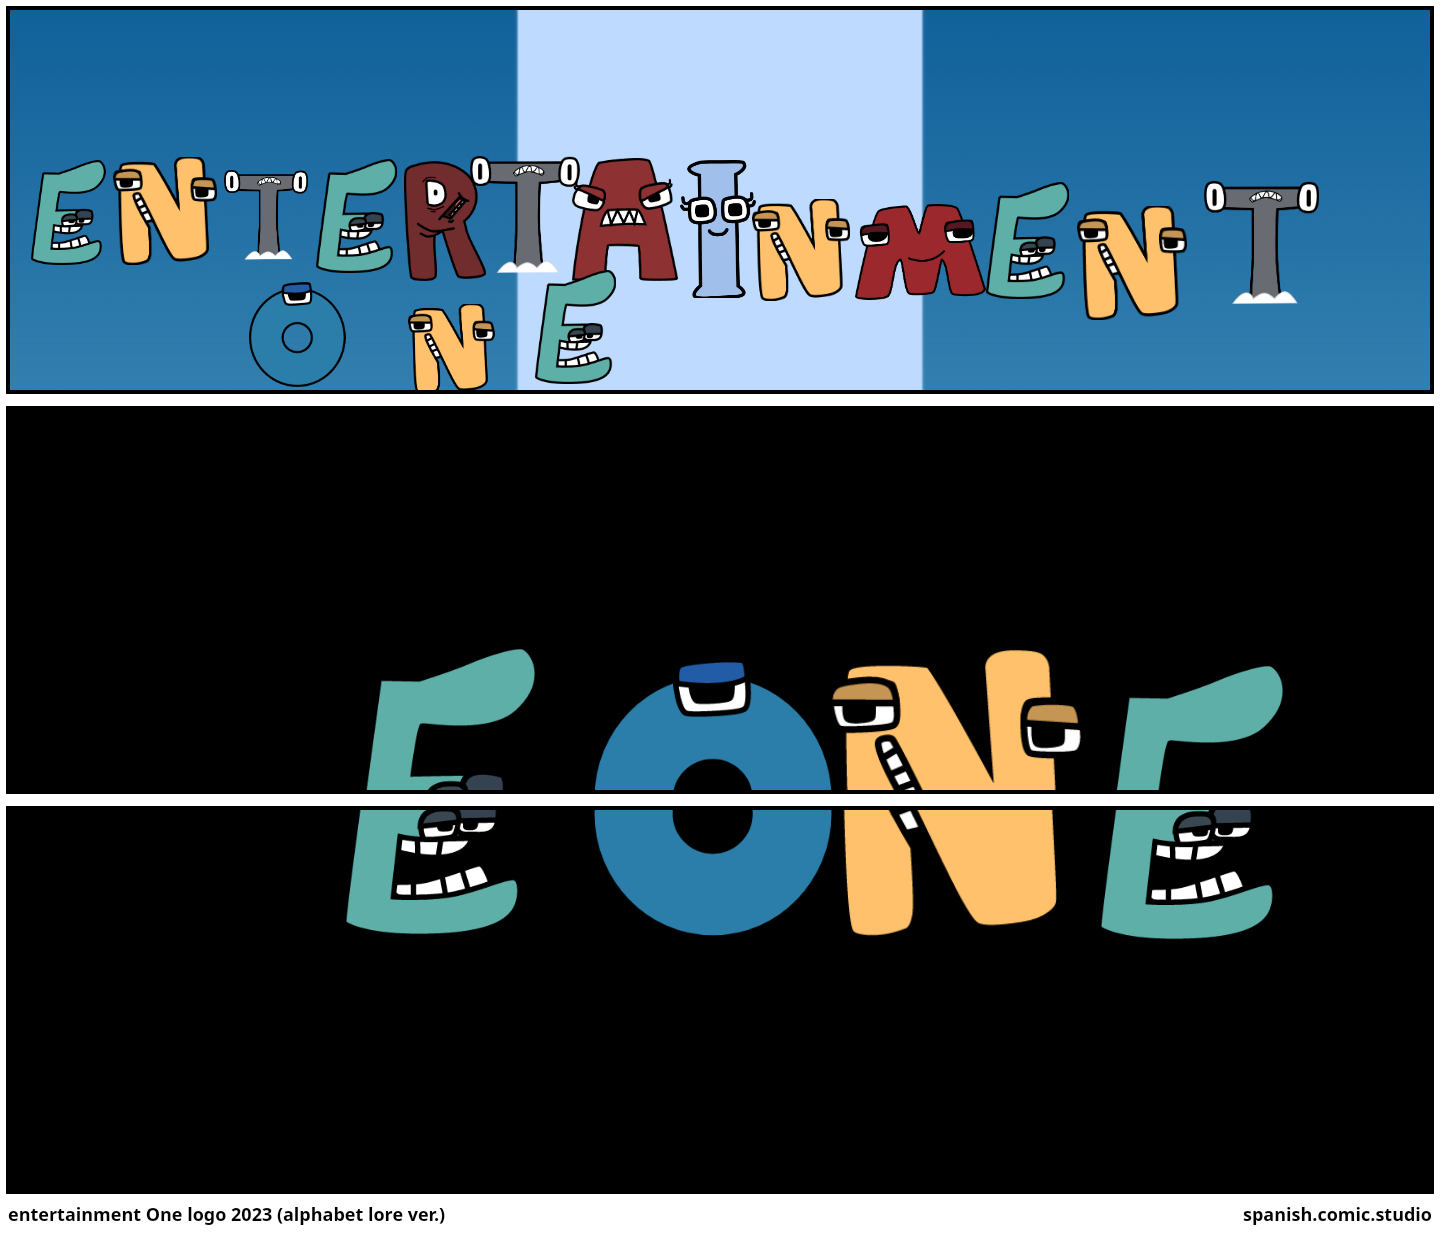 entertainment One logo 2023 (alphabet lore ver.)